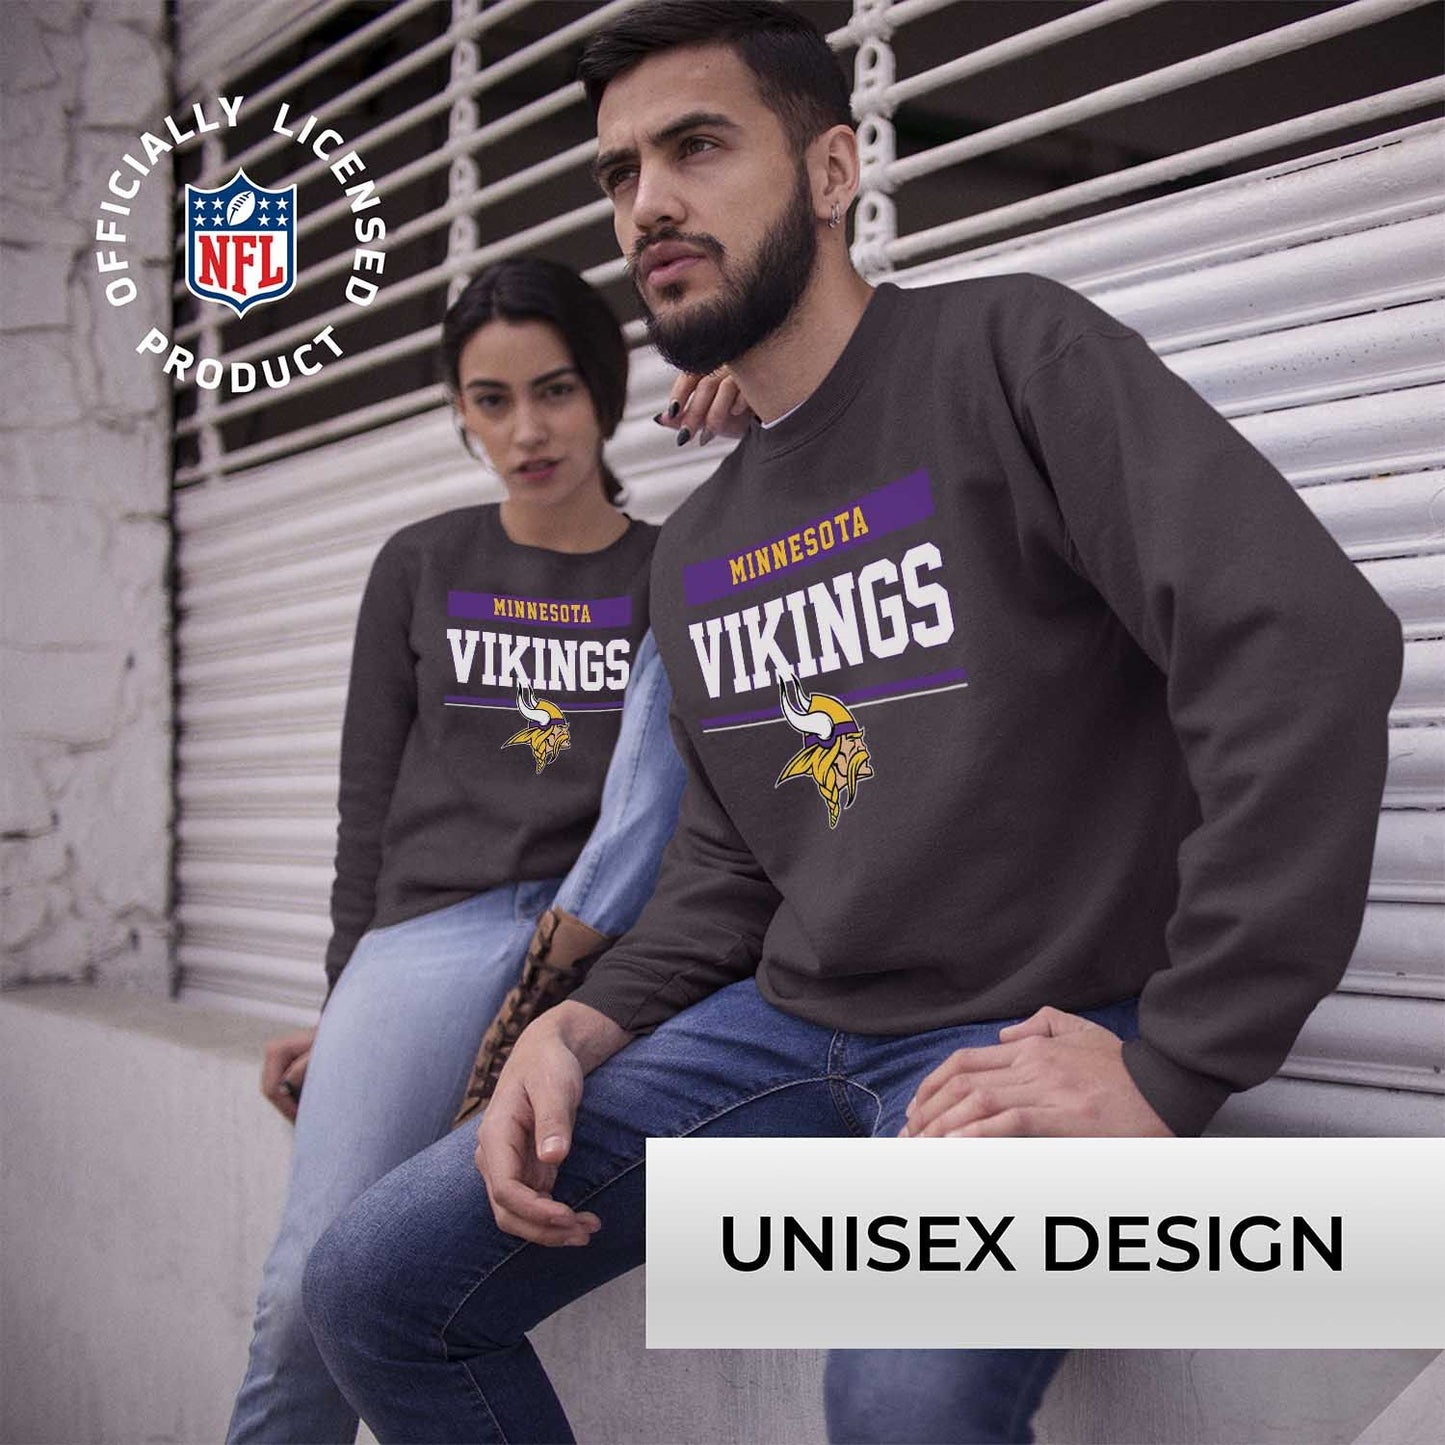 Minnesota Vikings NFL Adult Long Sleeve Team Block Charcoal Crewneck Sweatshirt - Charcoal